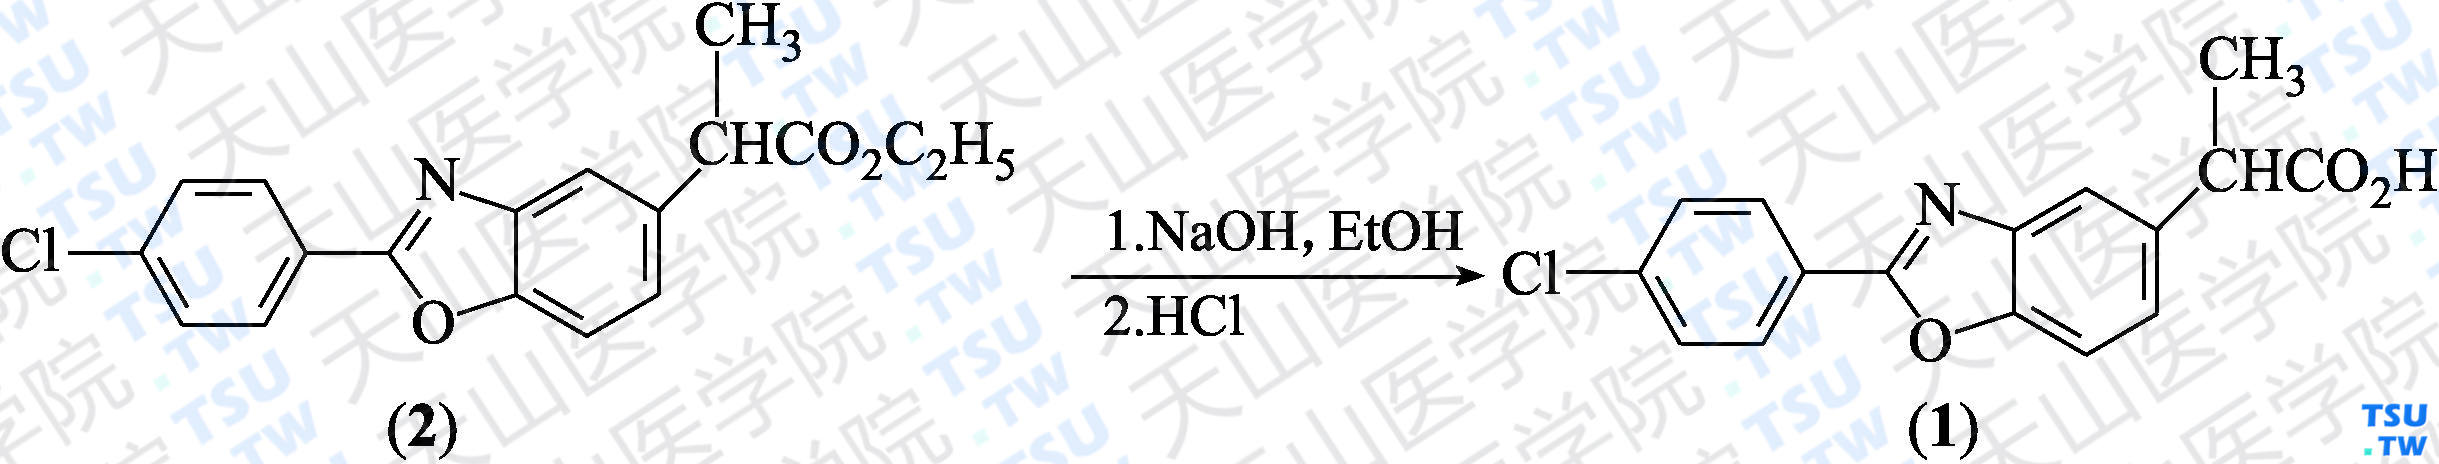 苯噁洛芬（分子式：C<sub>16</sub>H<sub>12</sub>ClNO<sub>3</sub>）的合成方法路线及其结构式